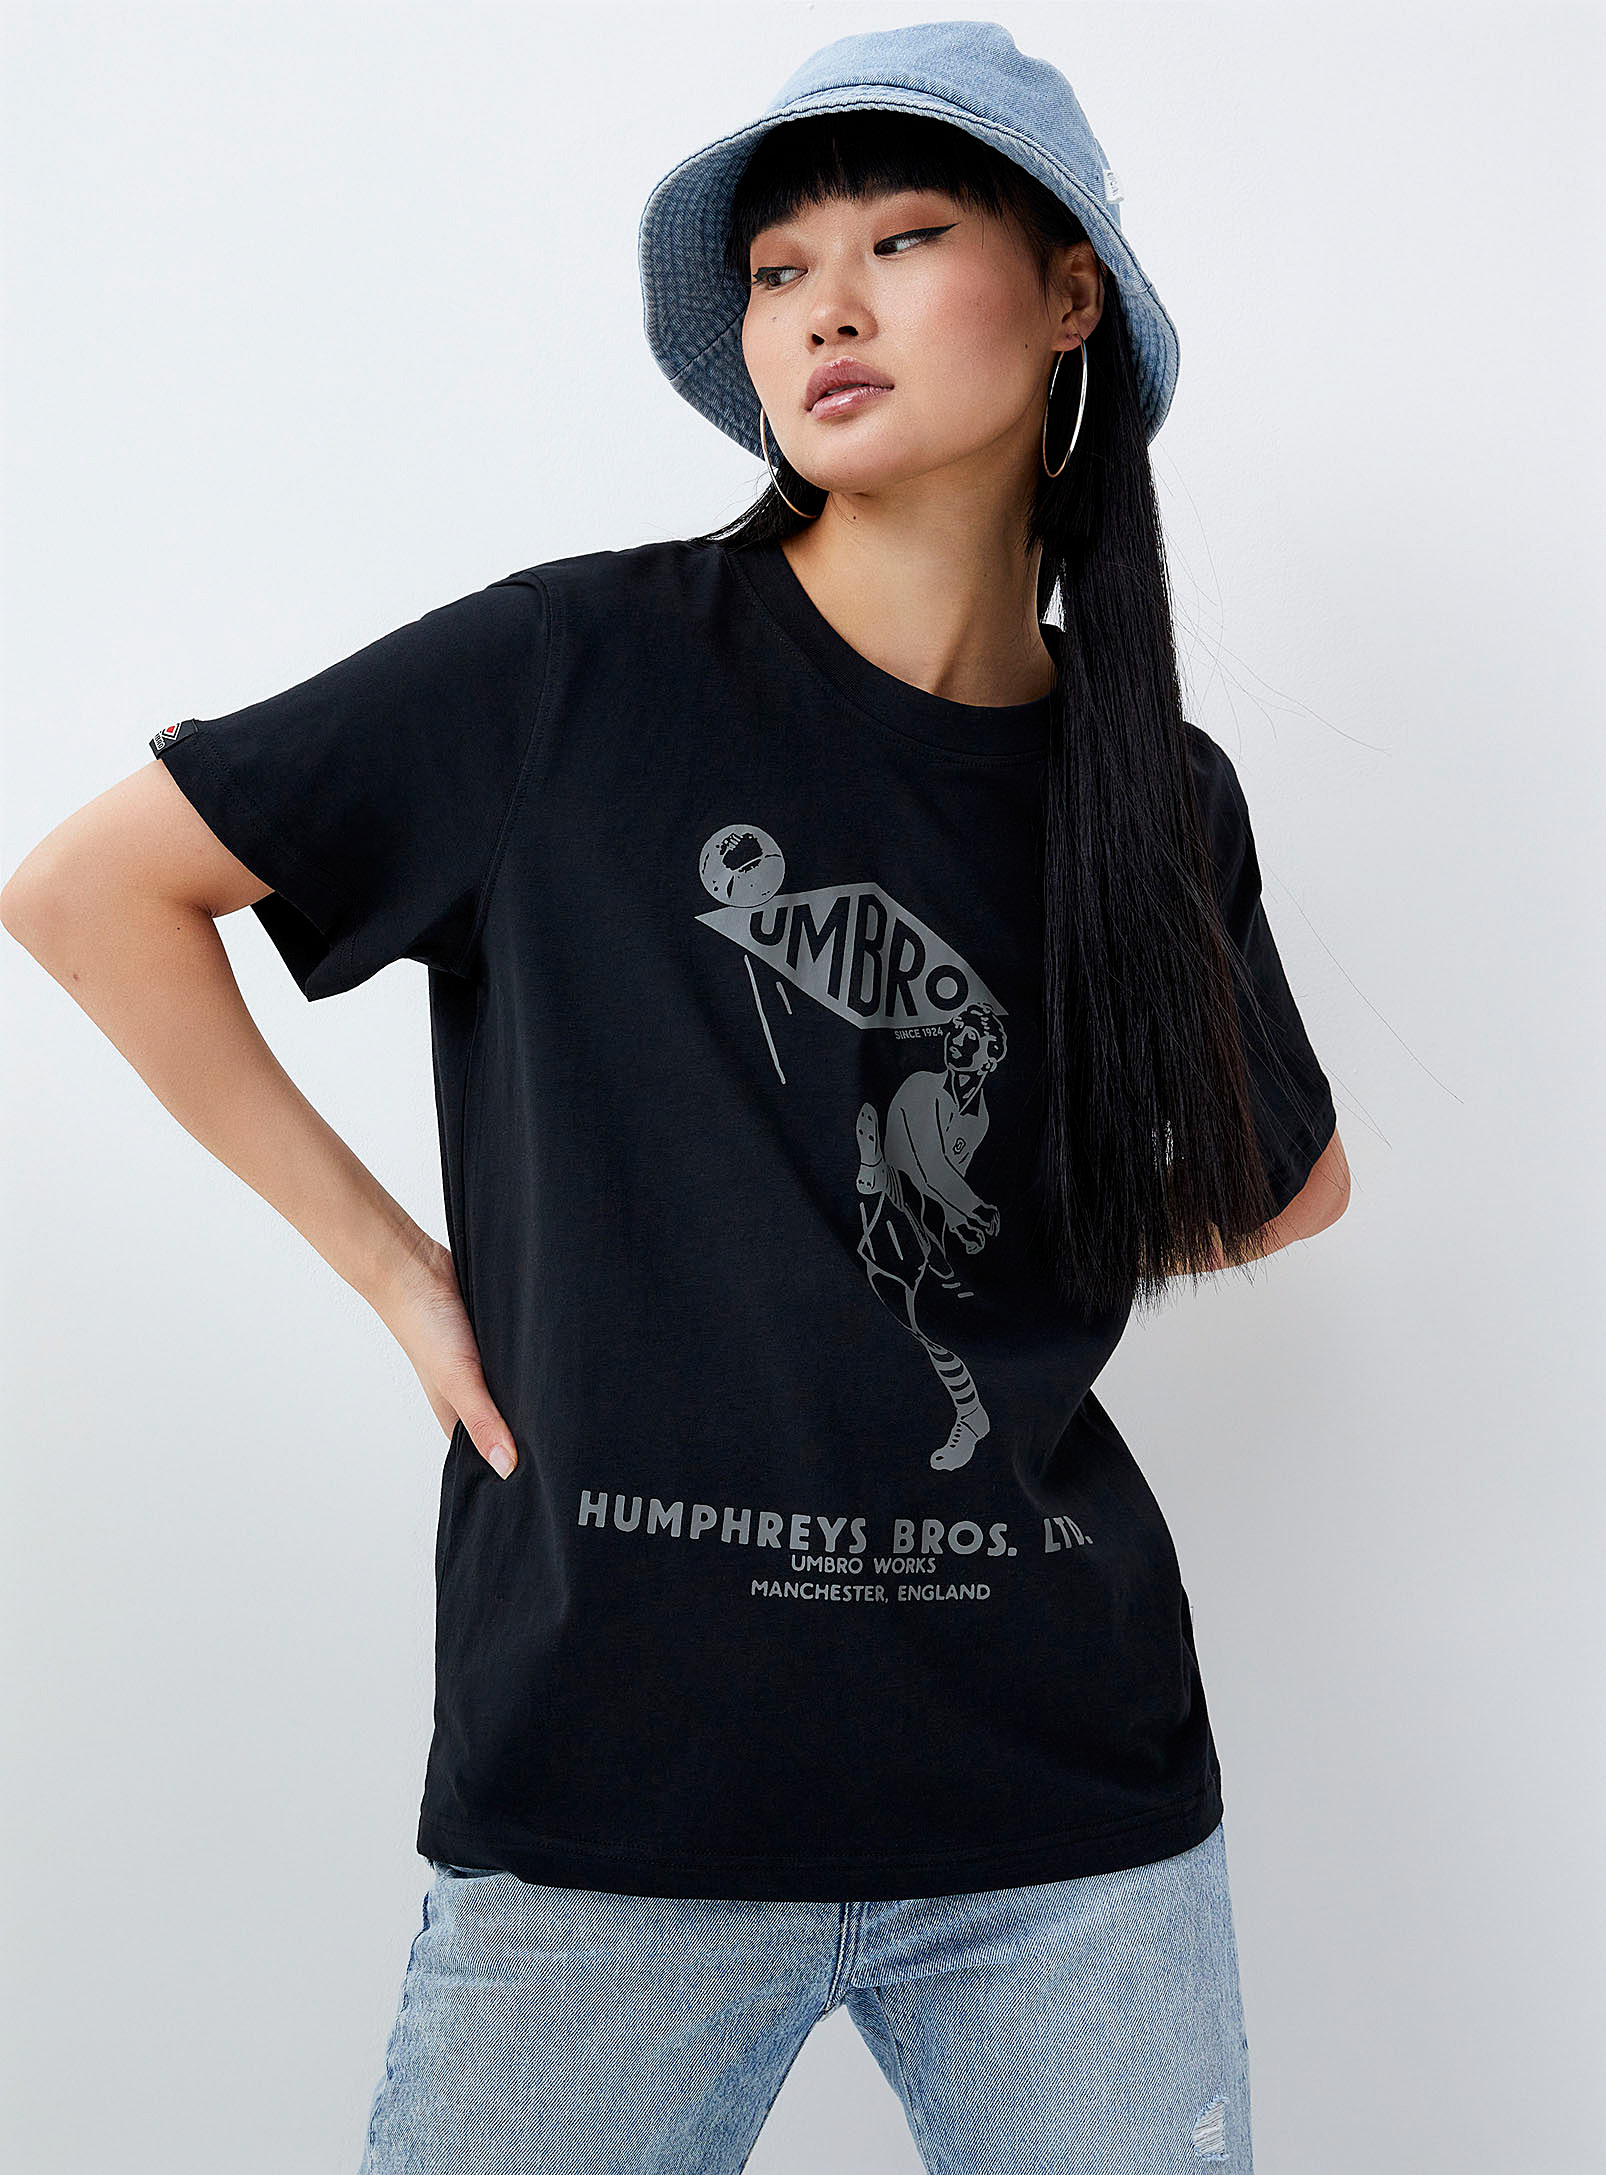 Umbro - Le t-shirt soccer Humphreys